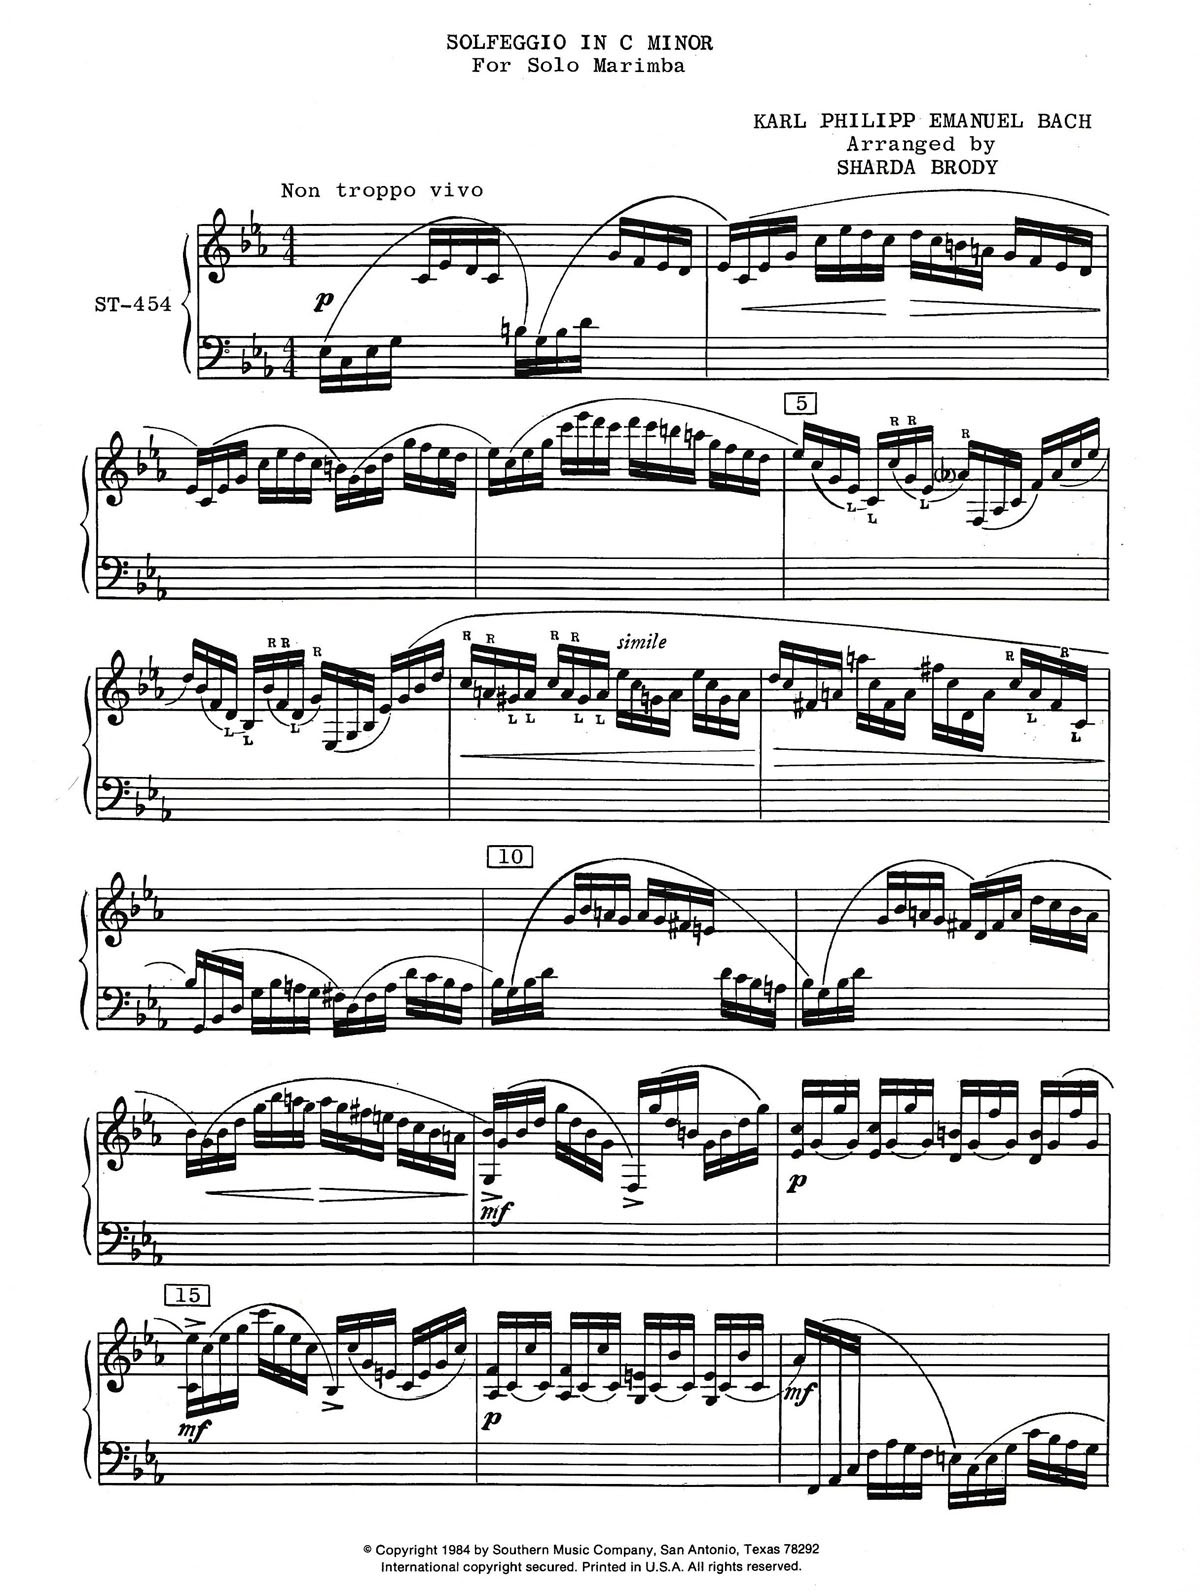 Solfeggio In C Minor by Bach arr. Shara Brody